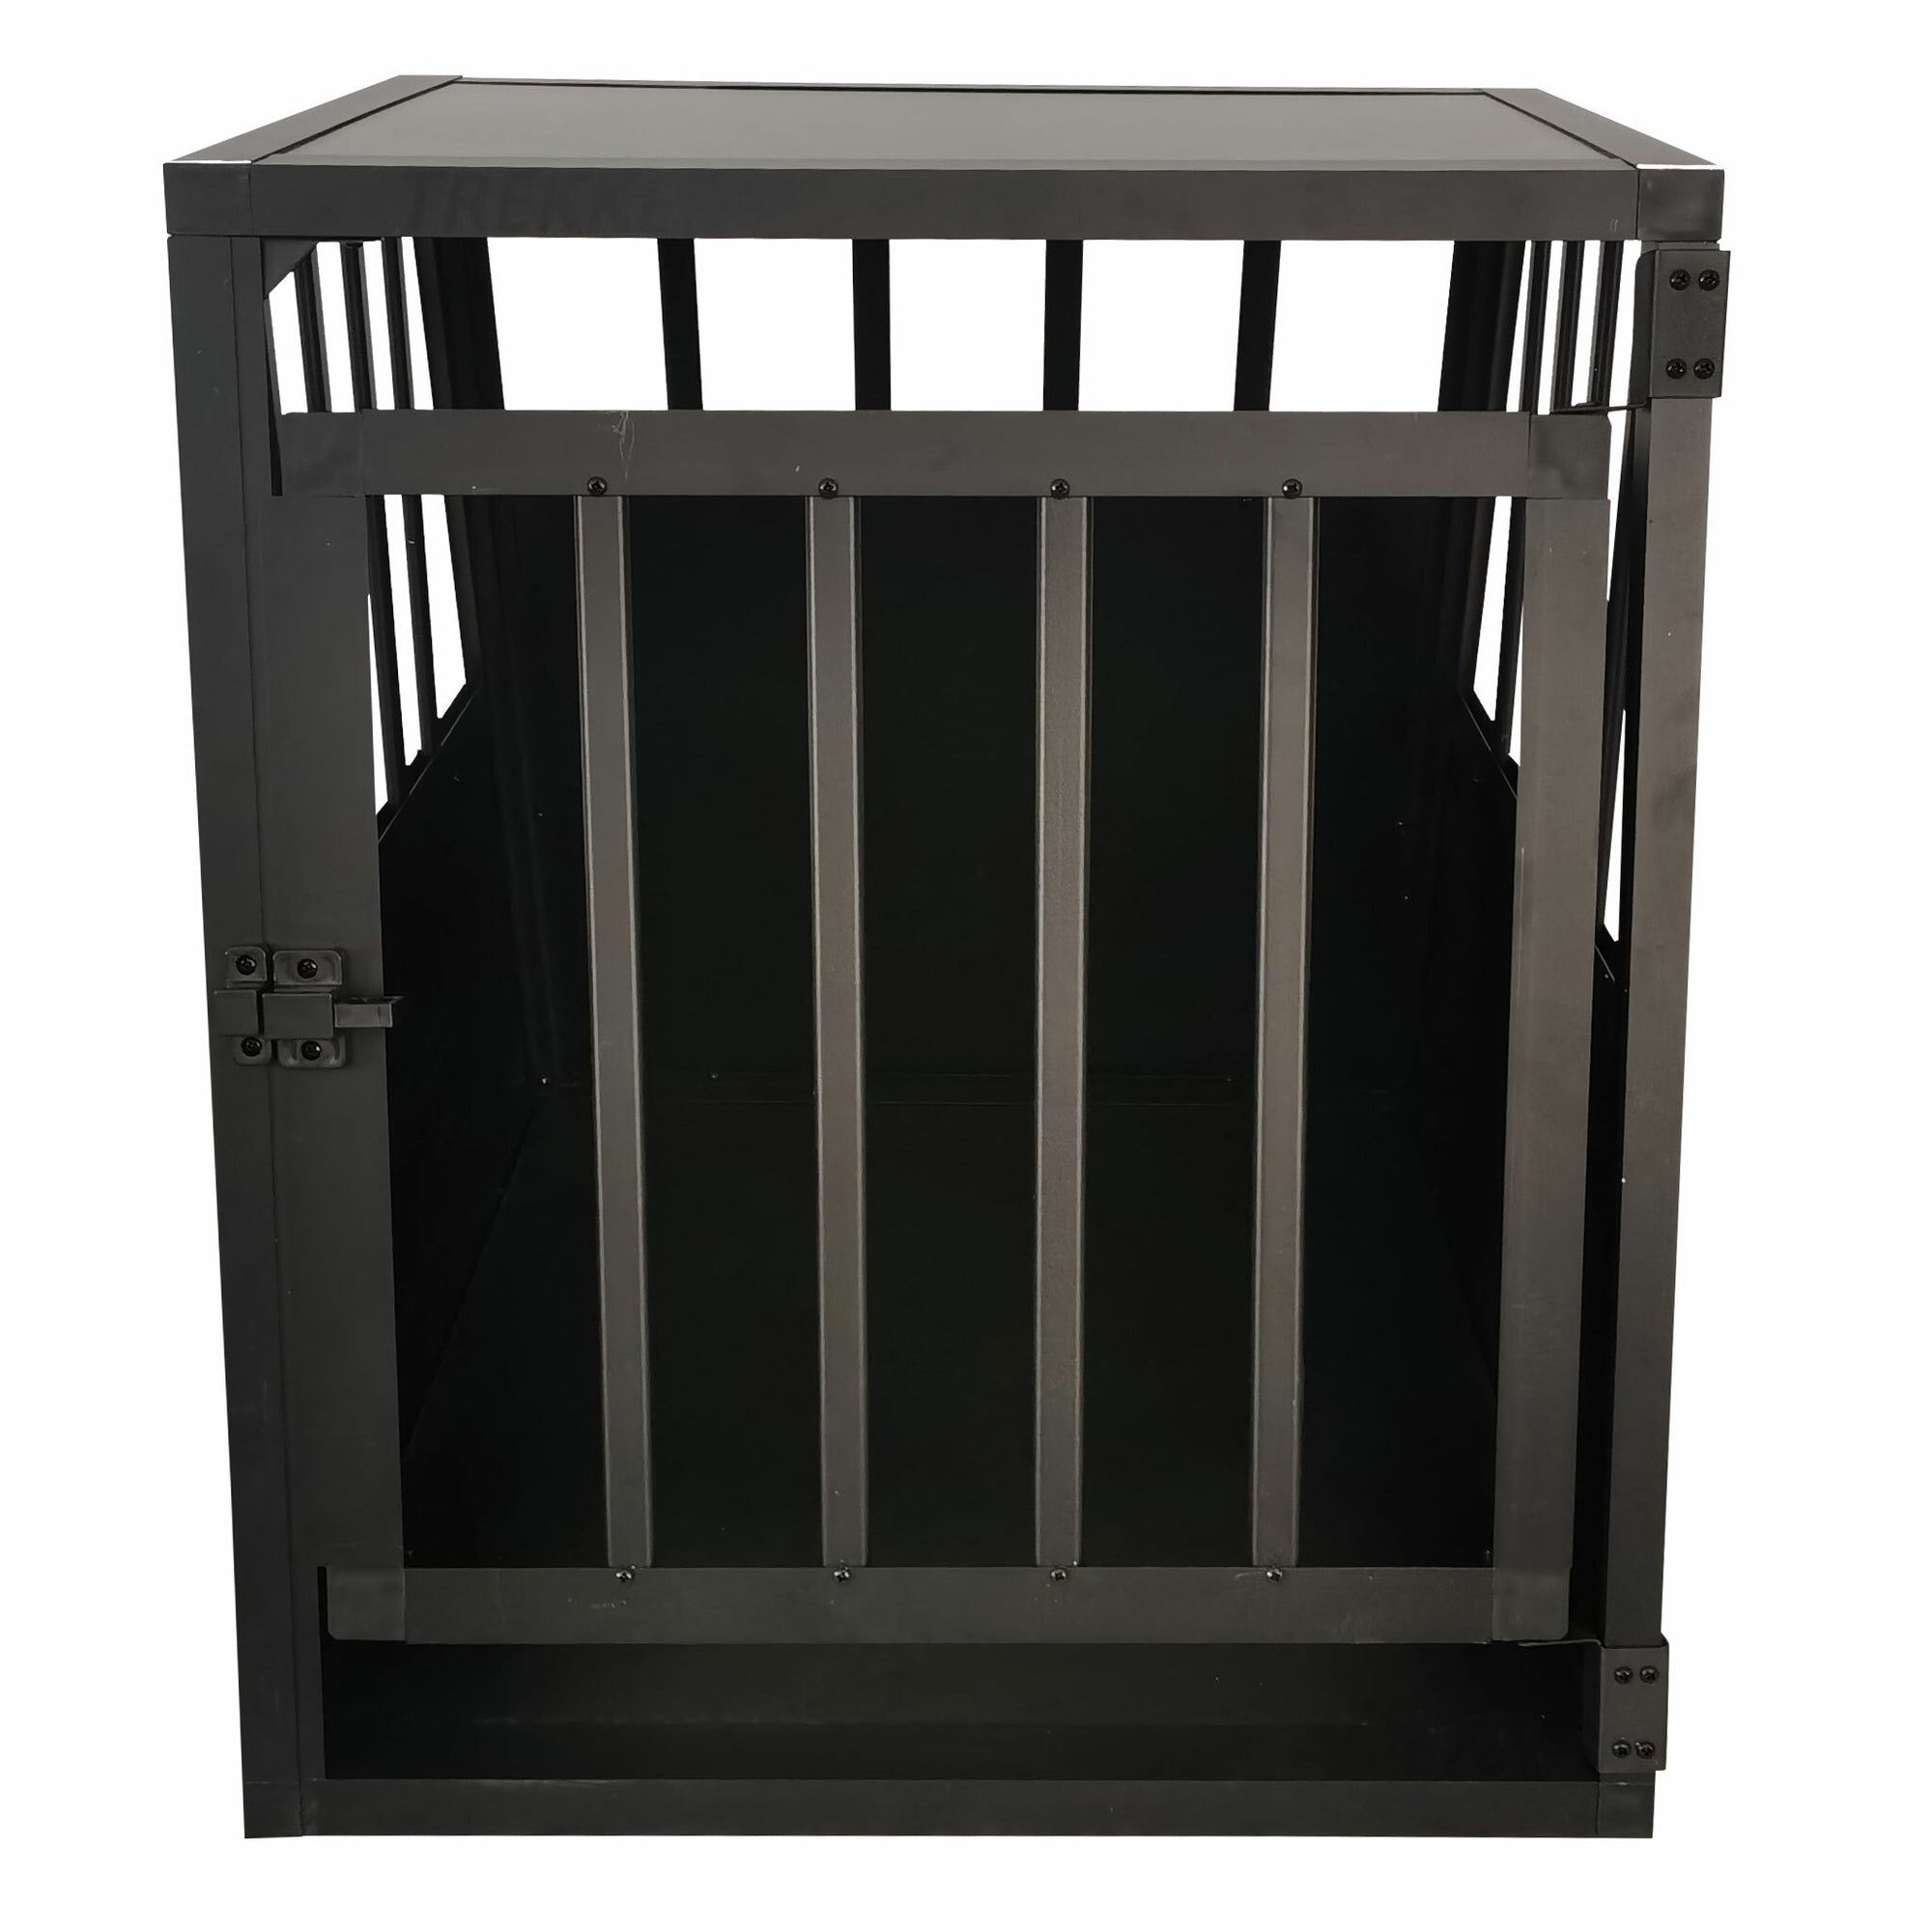 Trekker Dog Crate S 54x69x60cm, Black